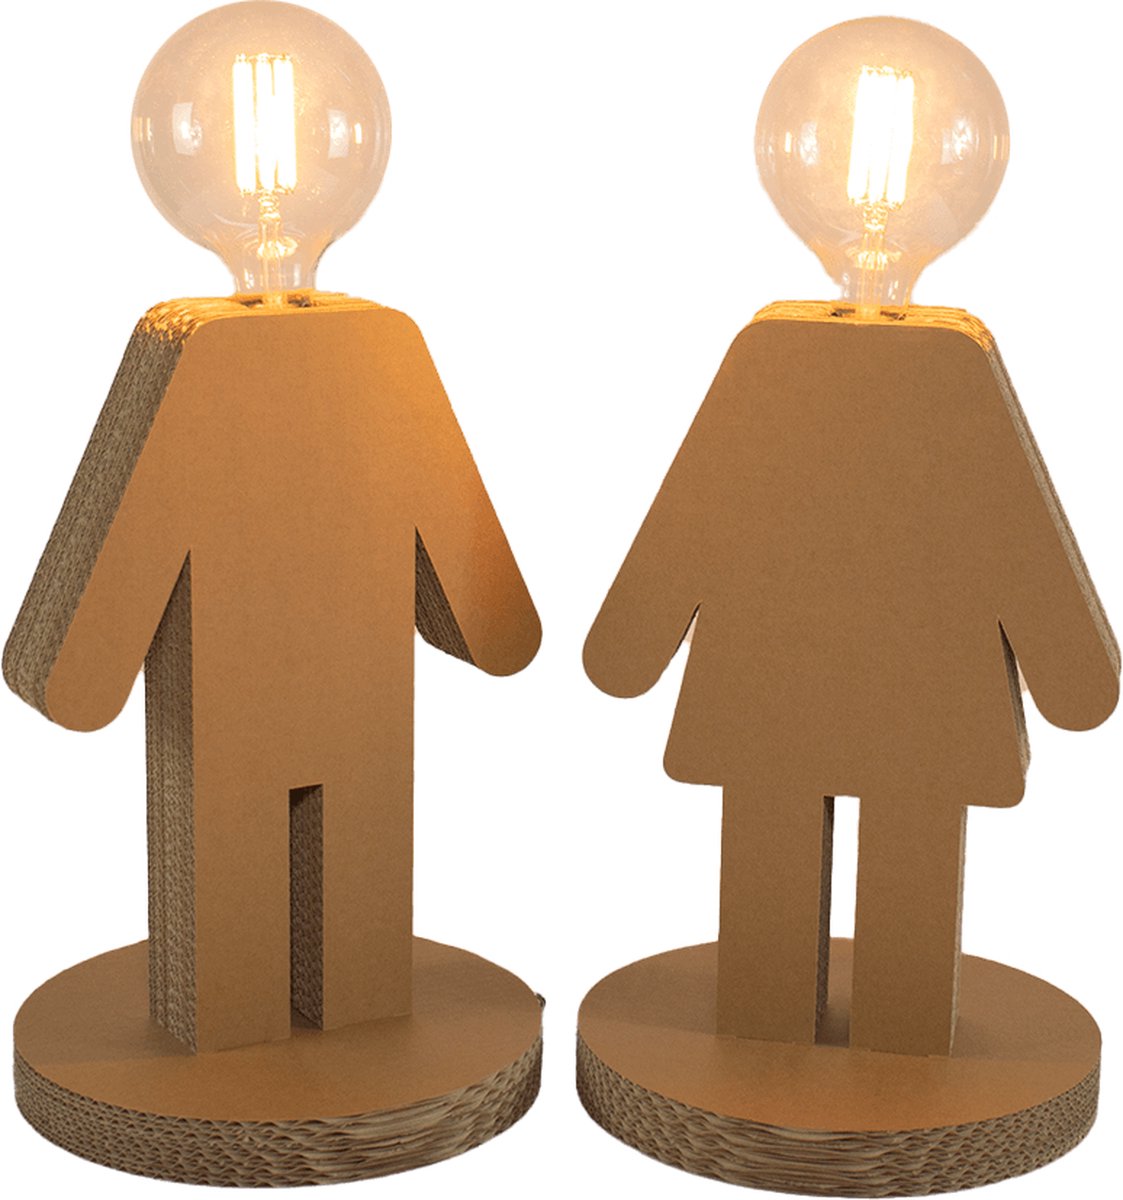 Kartonnen Hérouville Poppetjes Lamp - Man - Tafellamp van karton - E27 fitting - 27x27x41 cm - KarTent